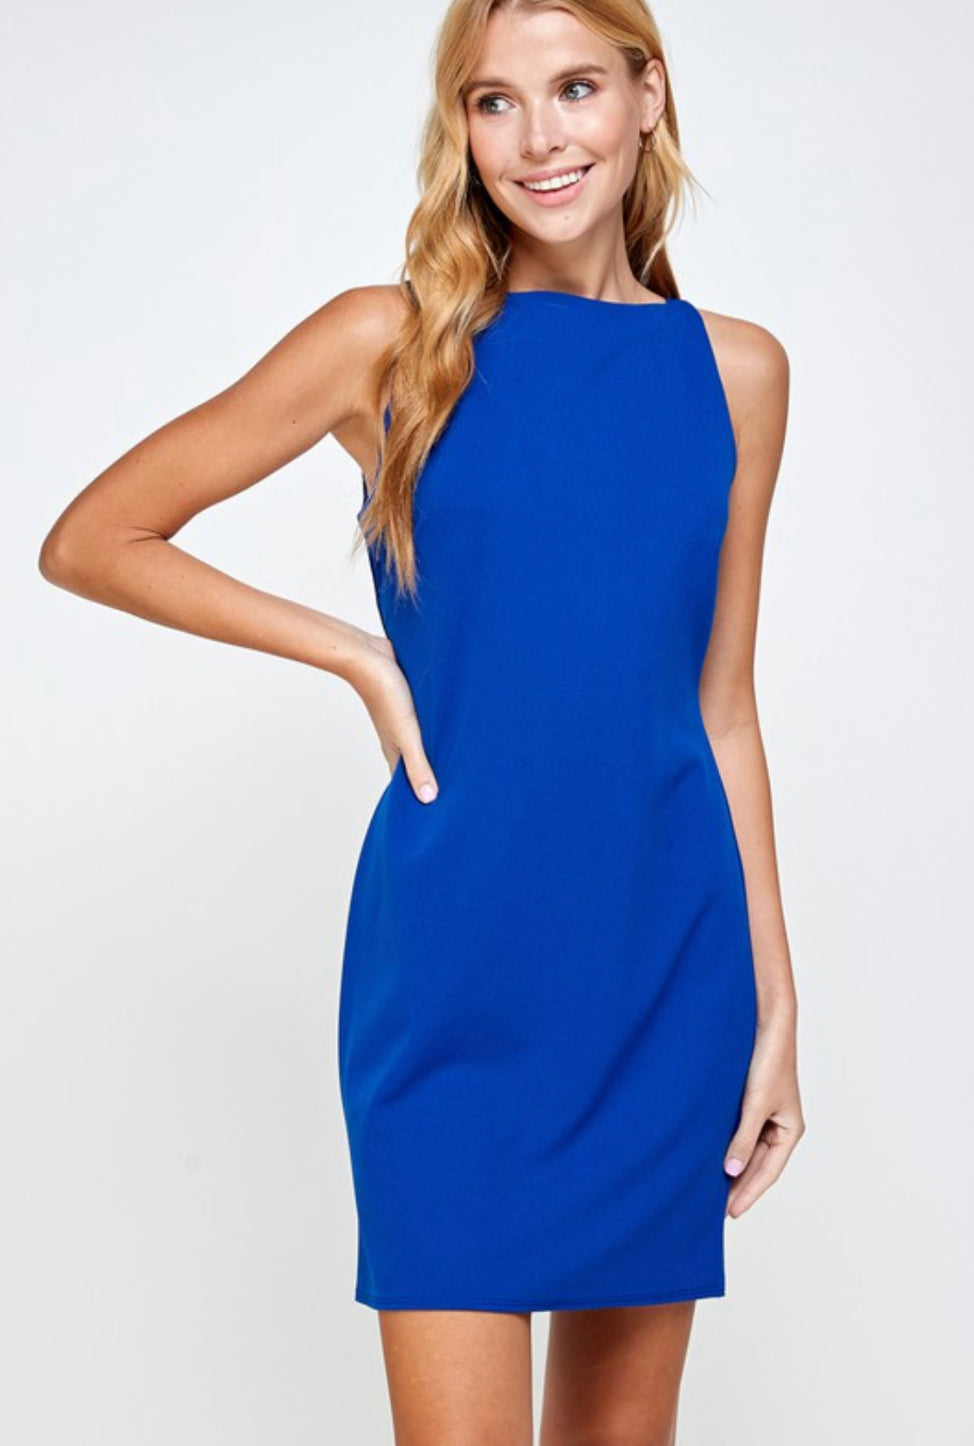 Royal Blue Sleeveless Short Dress